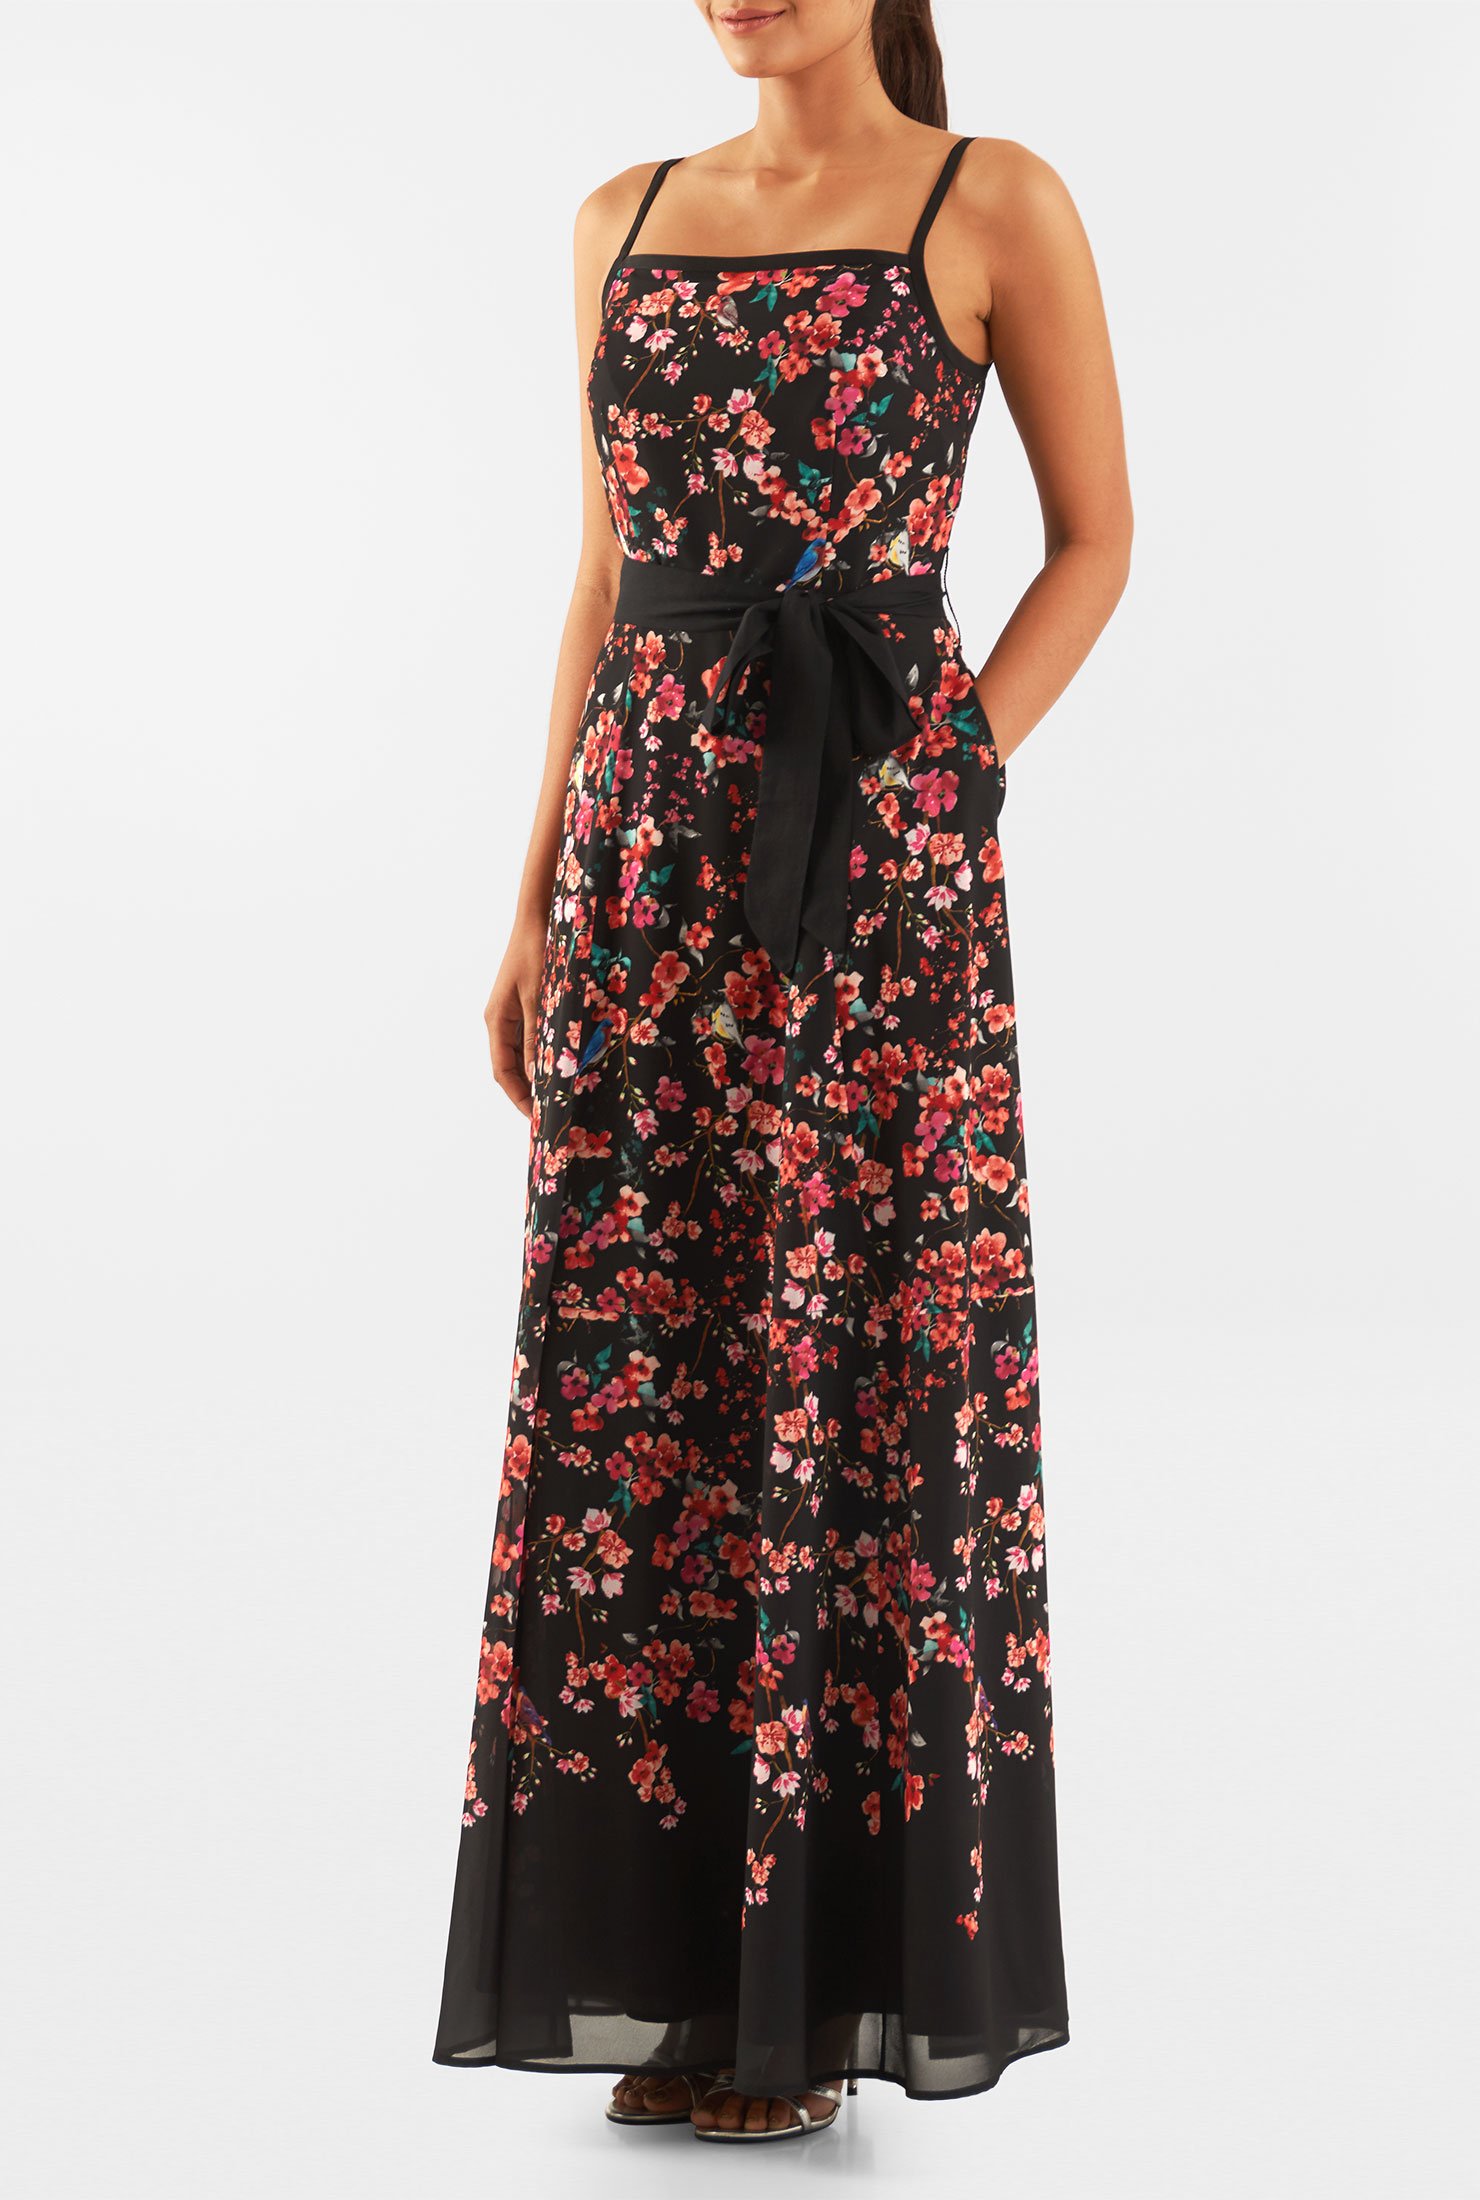 Shop Floral and bird print georgette dress | eShakti